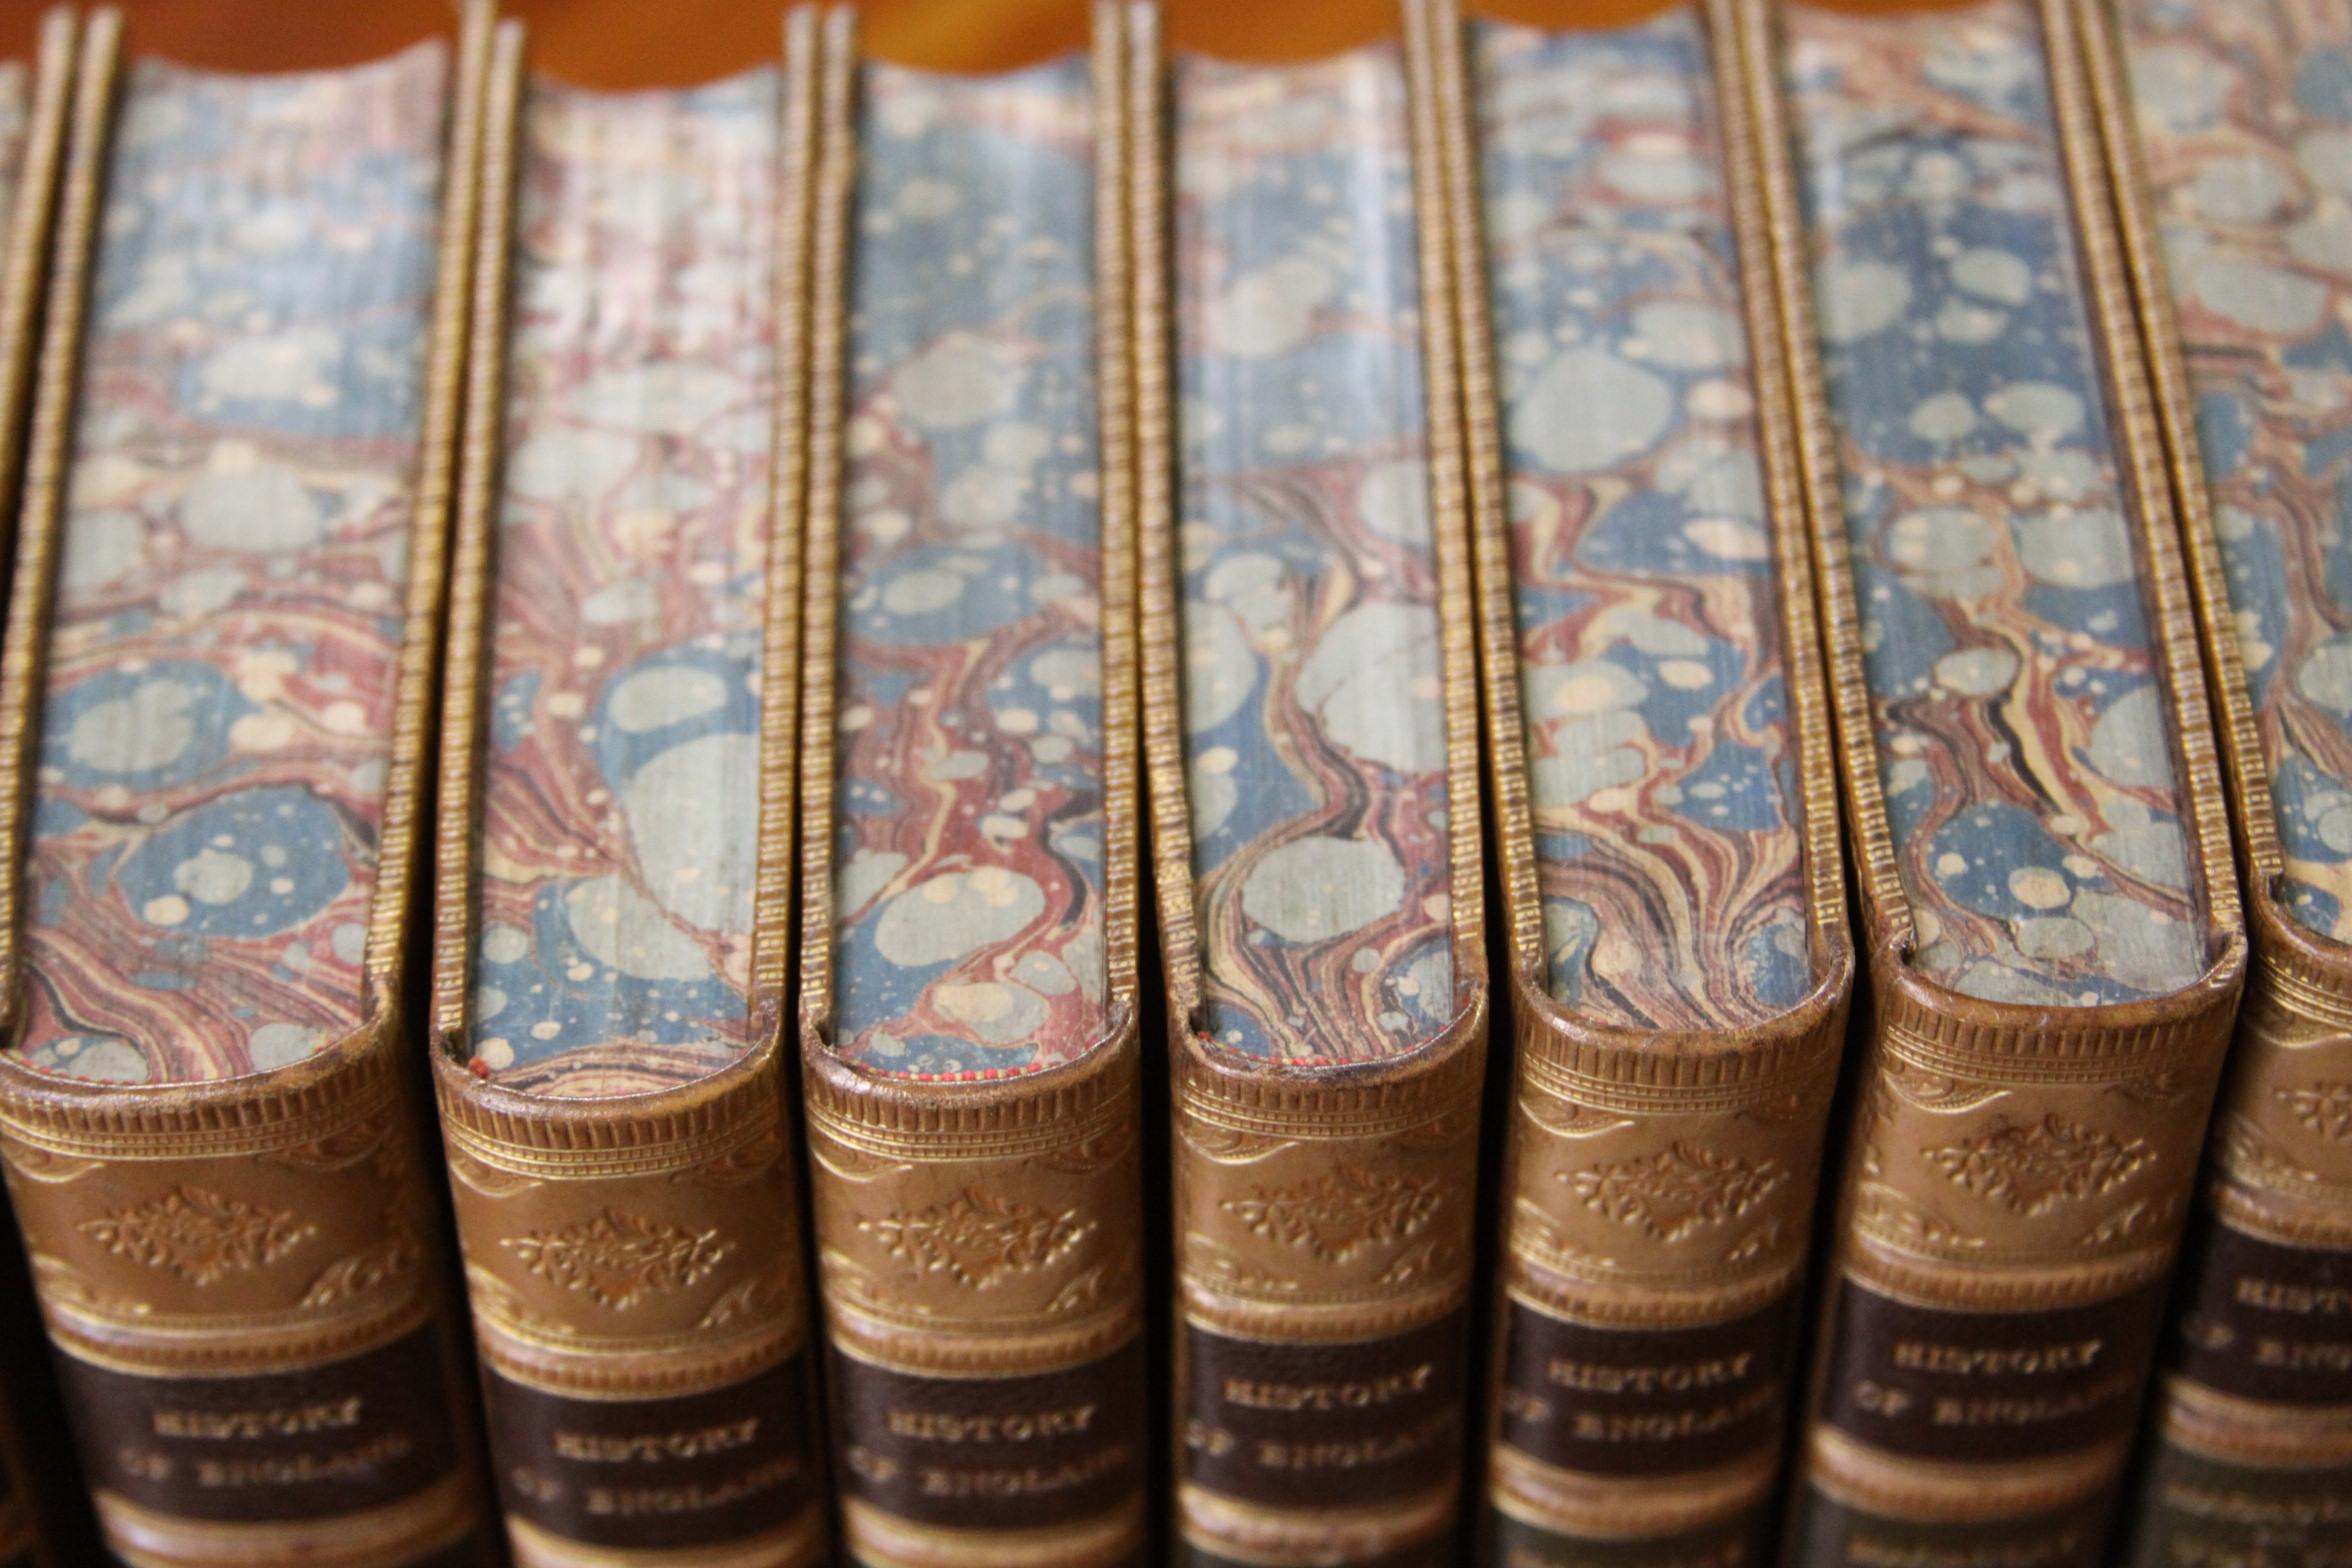 19th Century Books, History of England